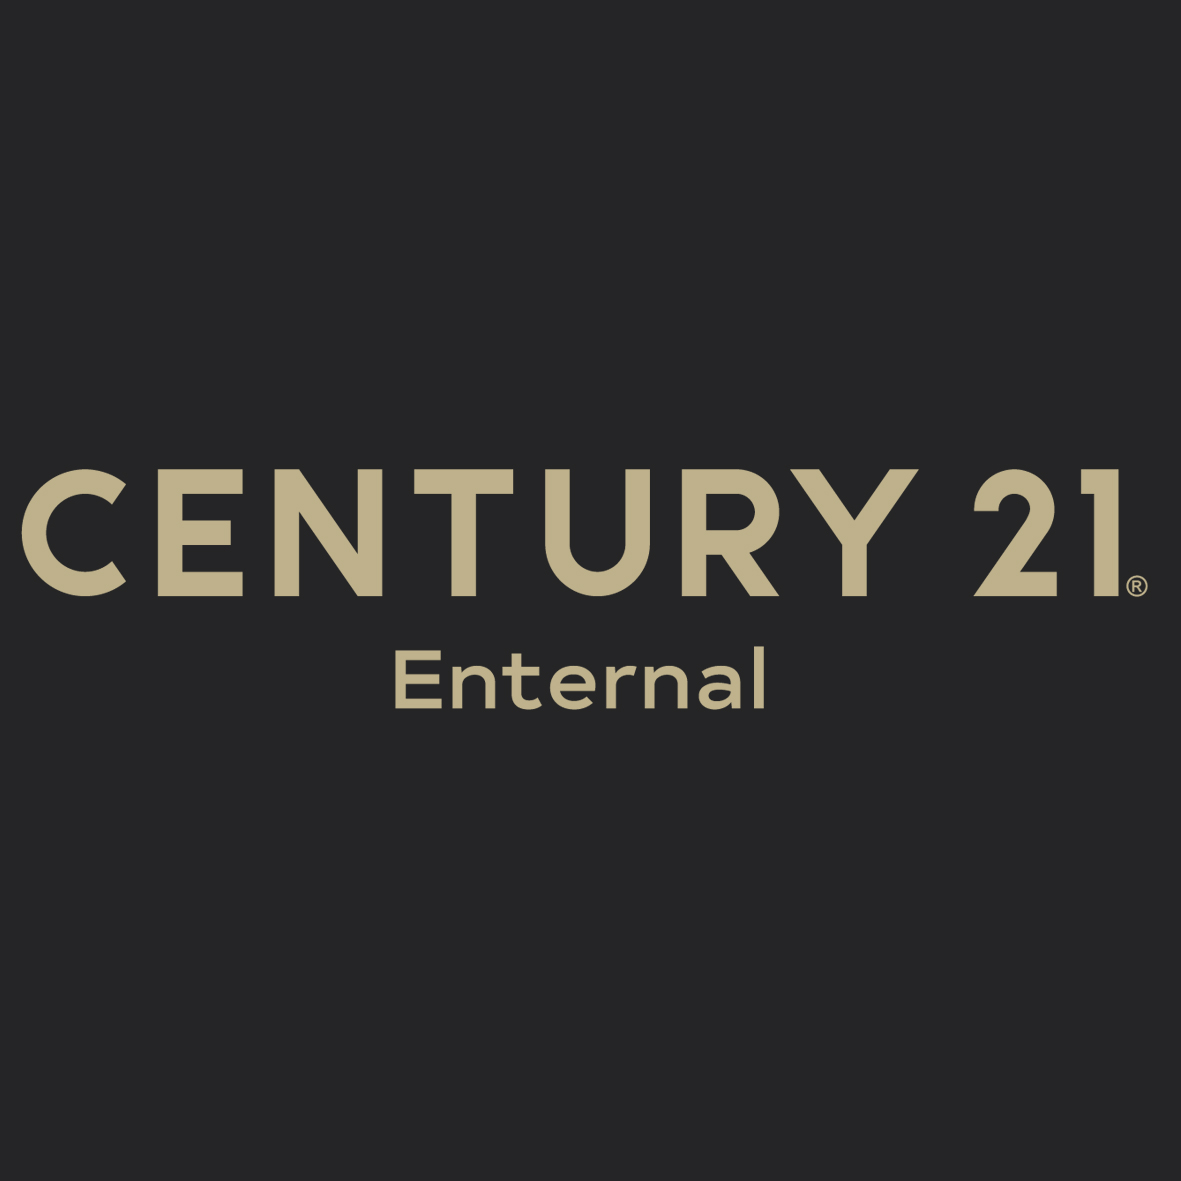 CENTURY 21 Enternal